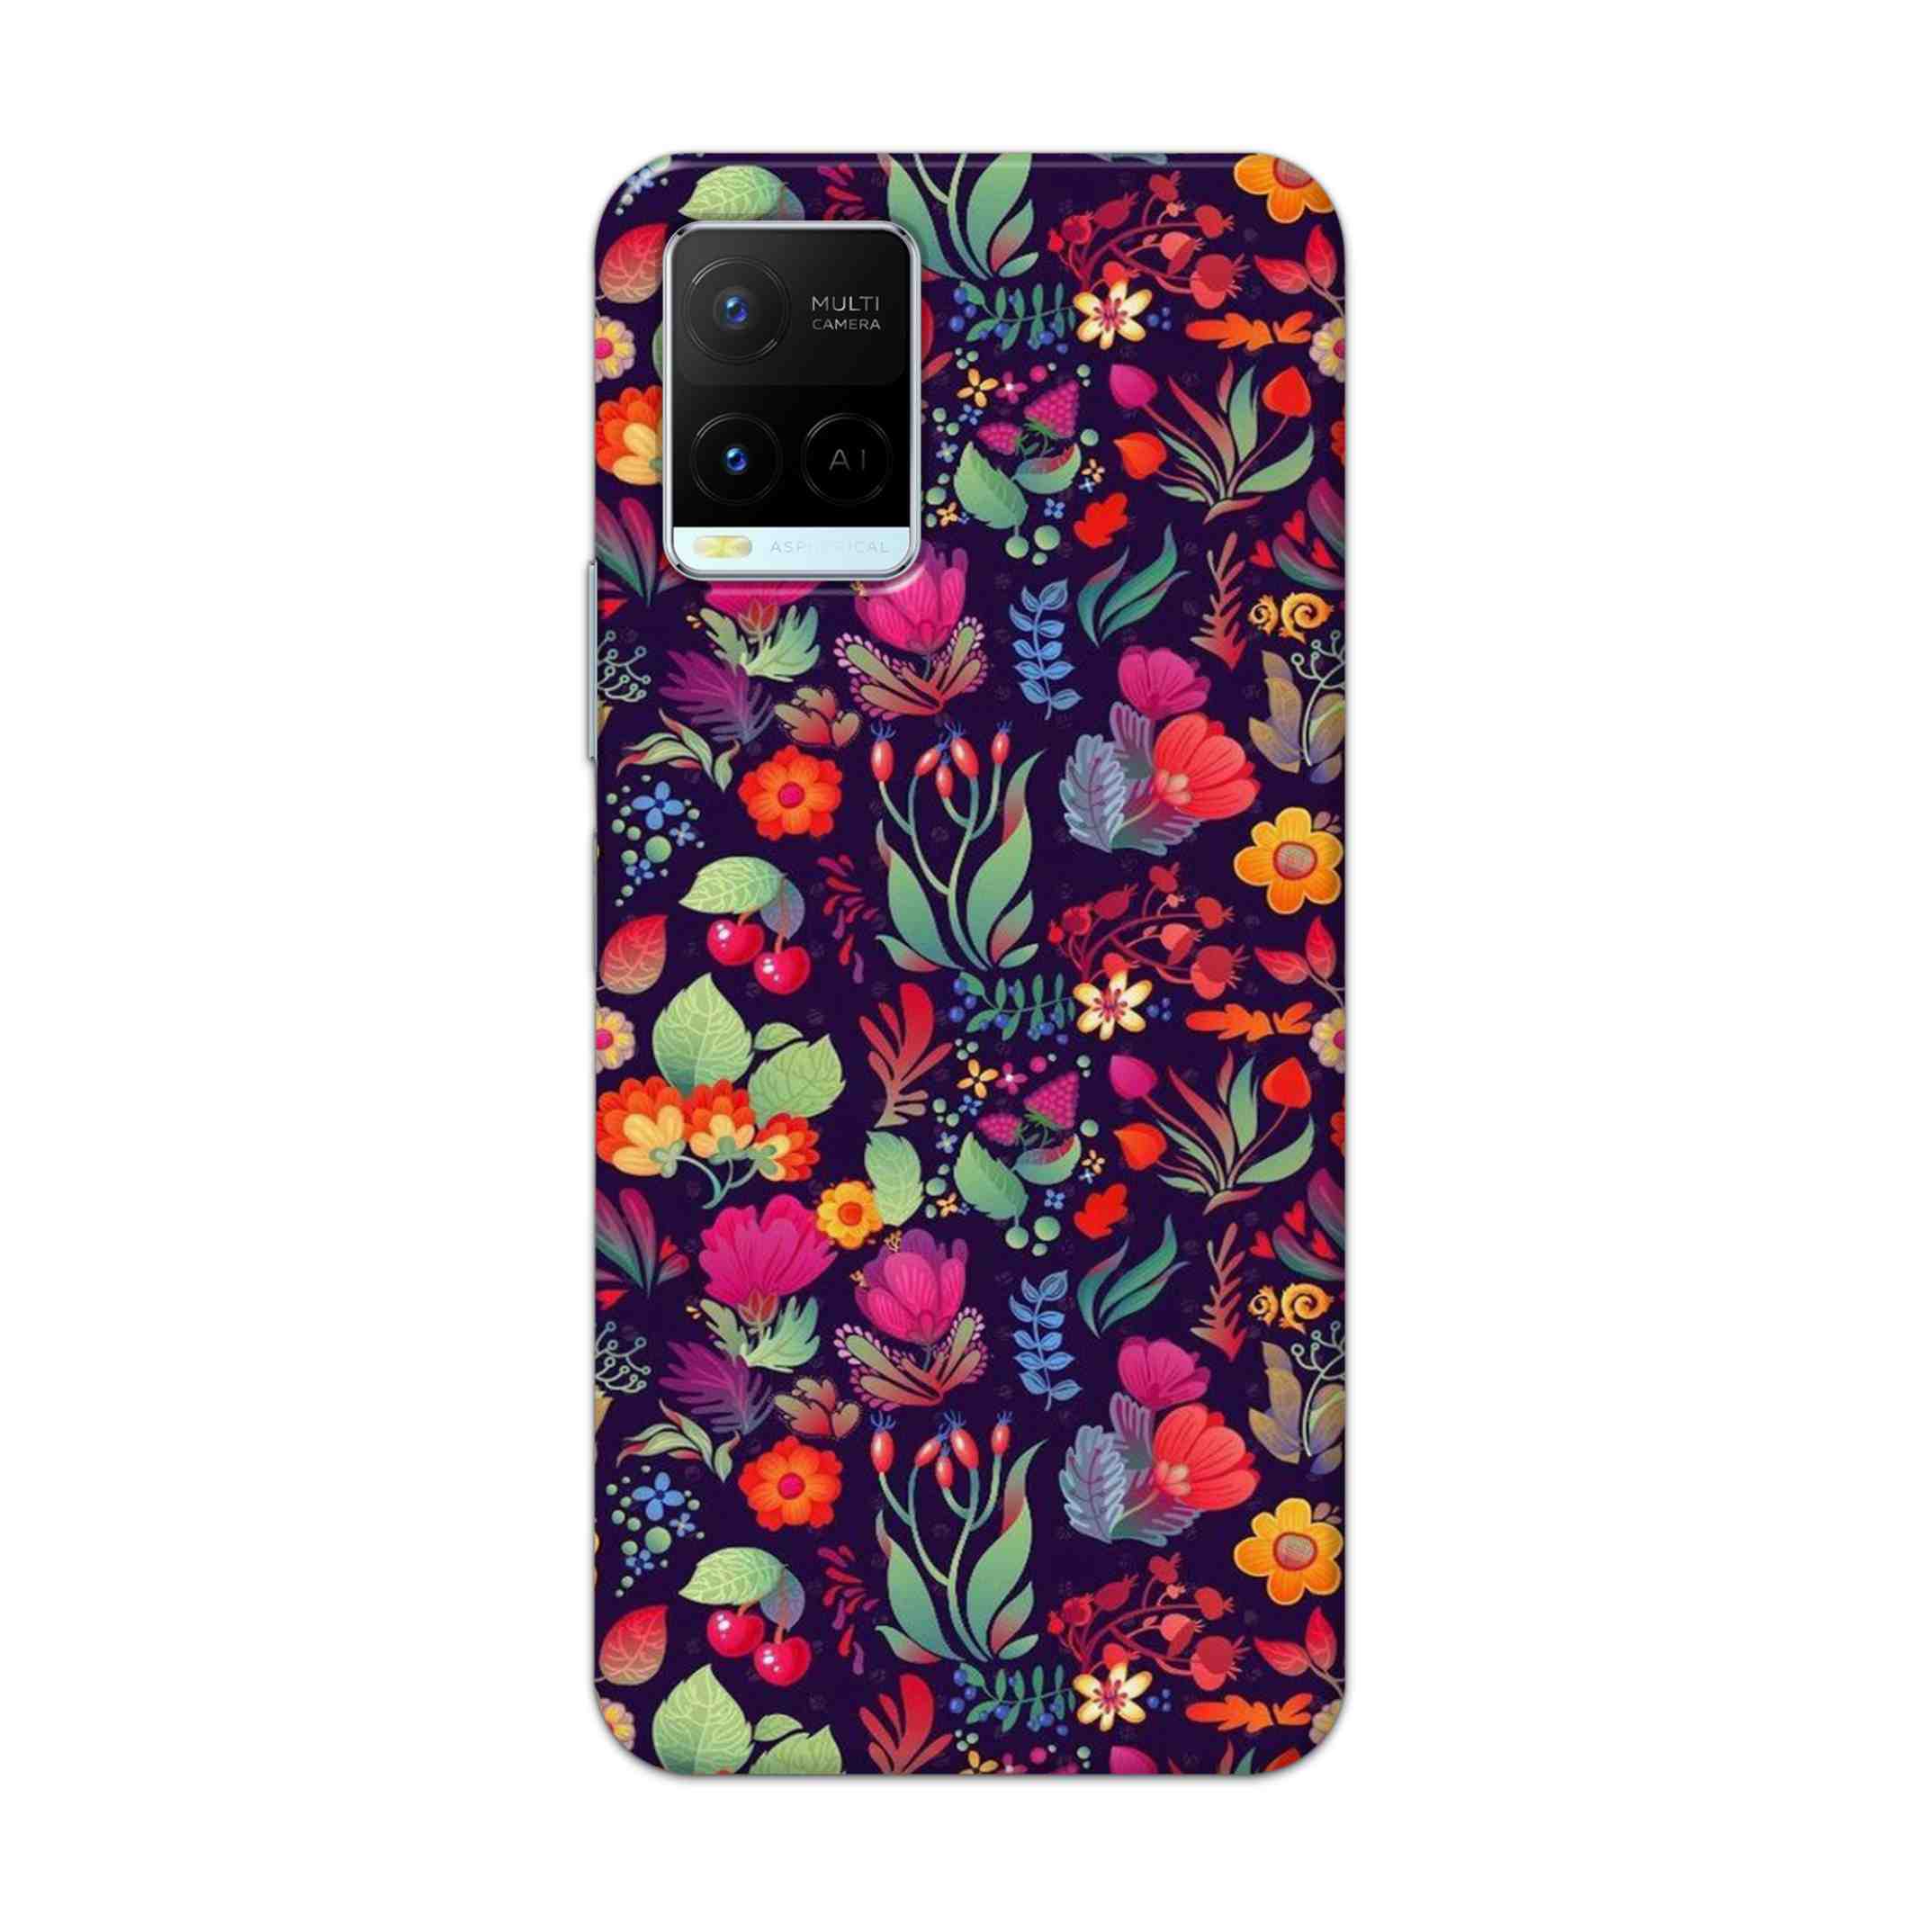 Buy Fruits Flower Hard Back Mobile Phone Case Cover For Vivo Y21 2021 Online